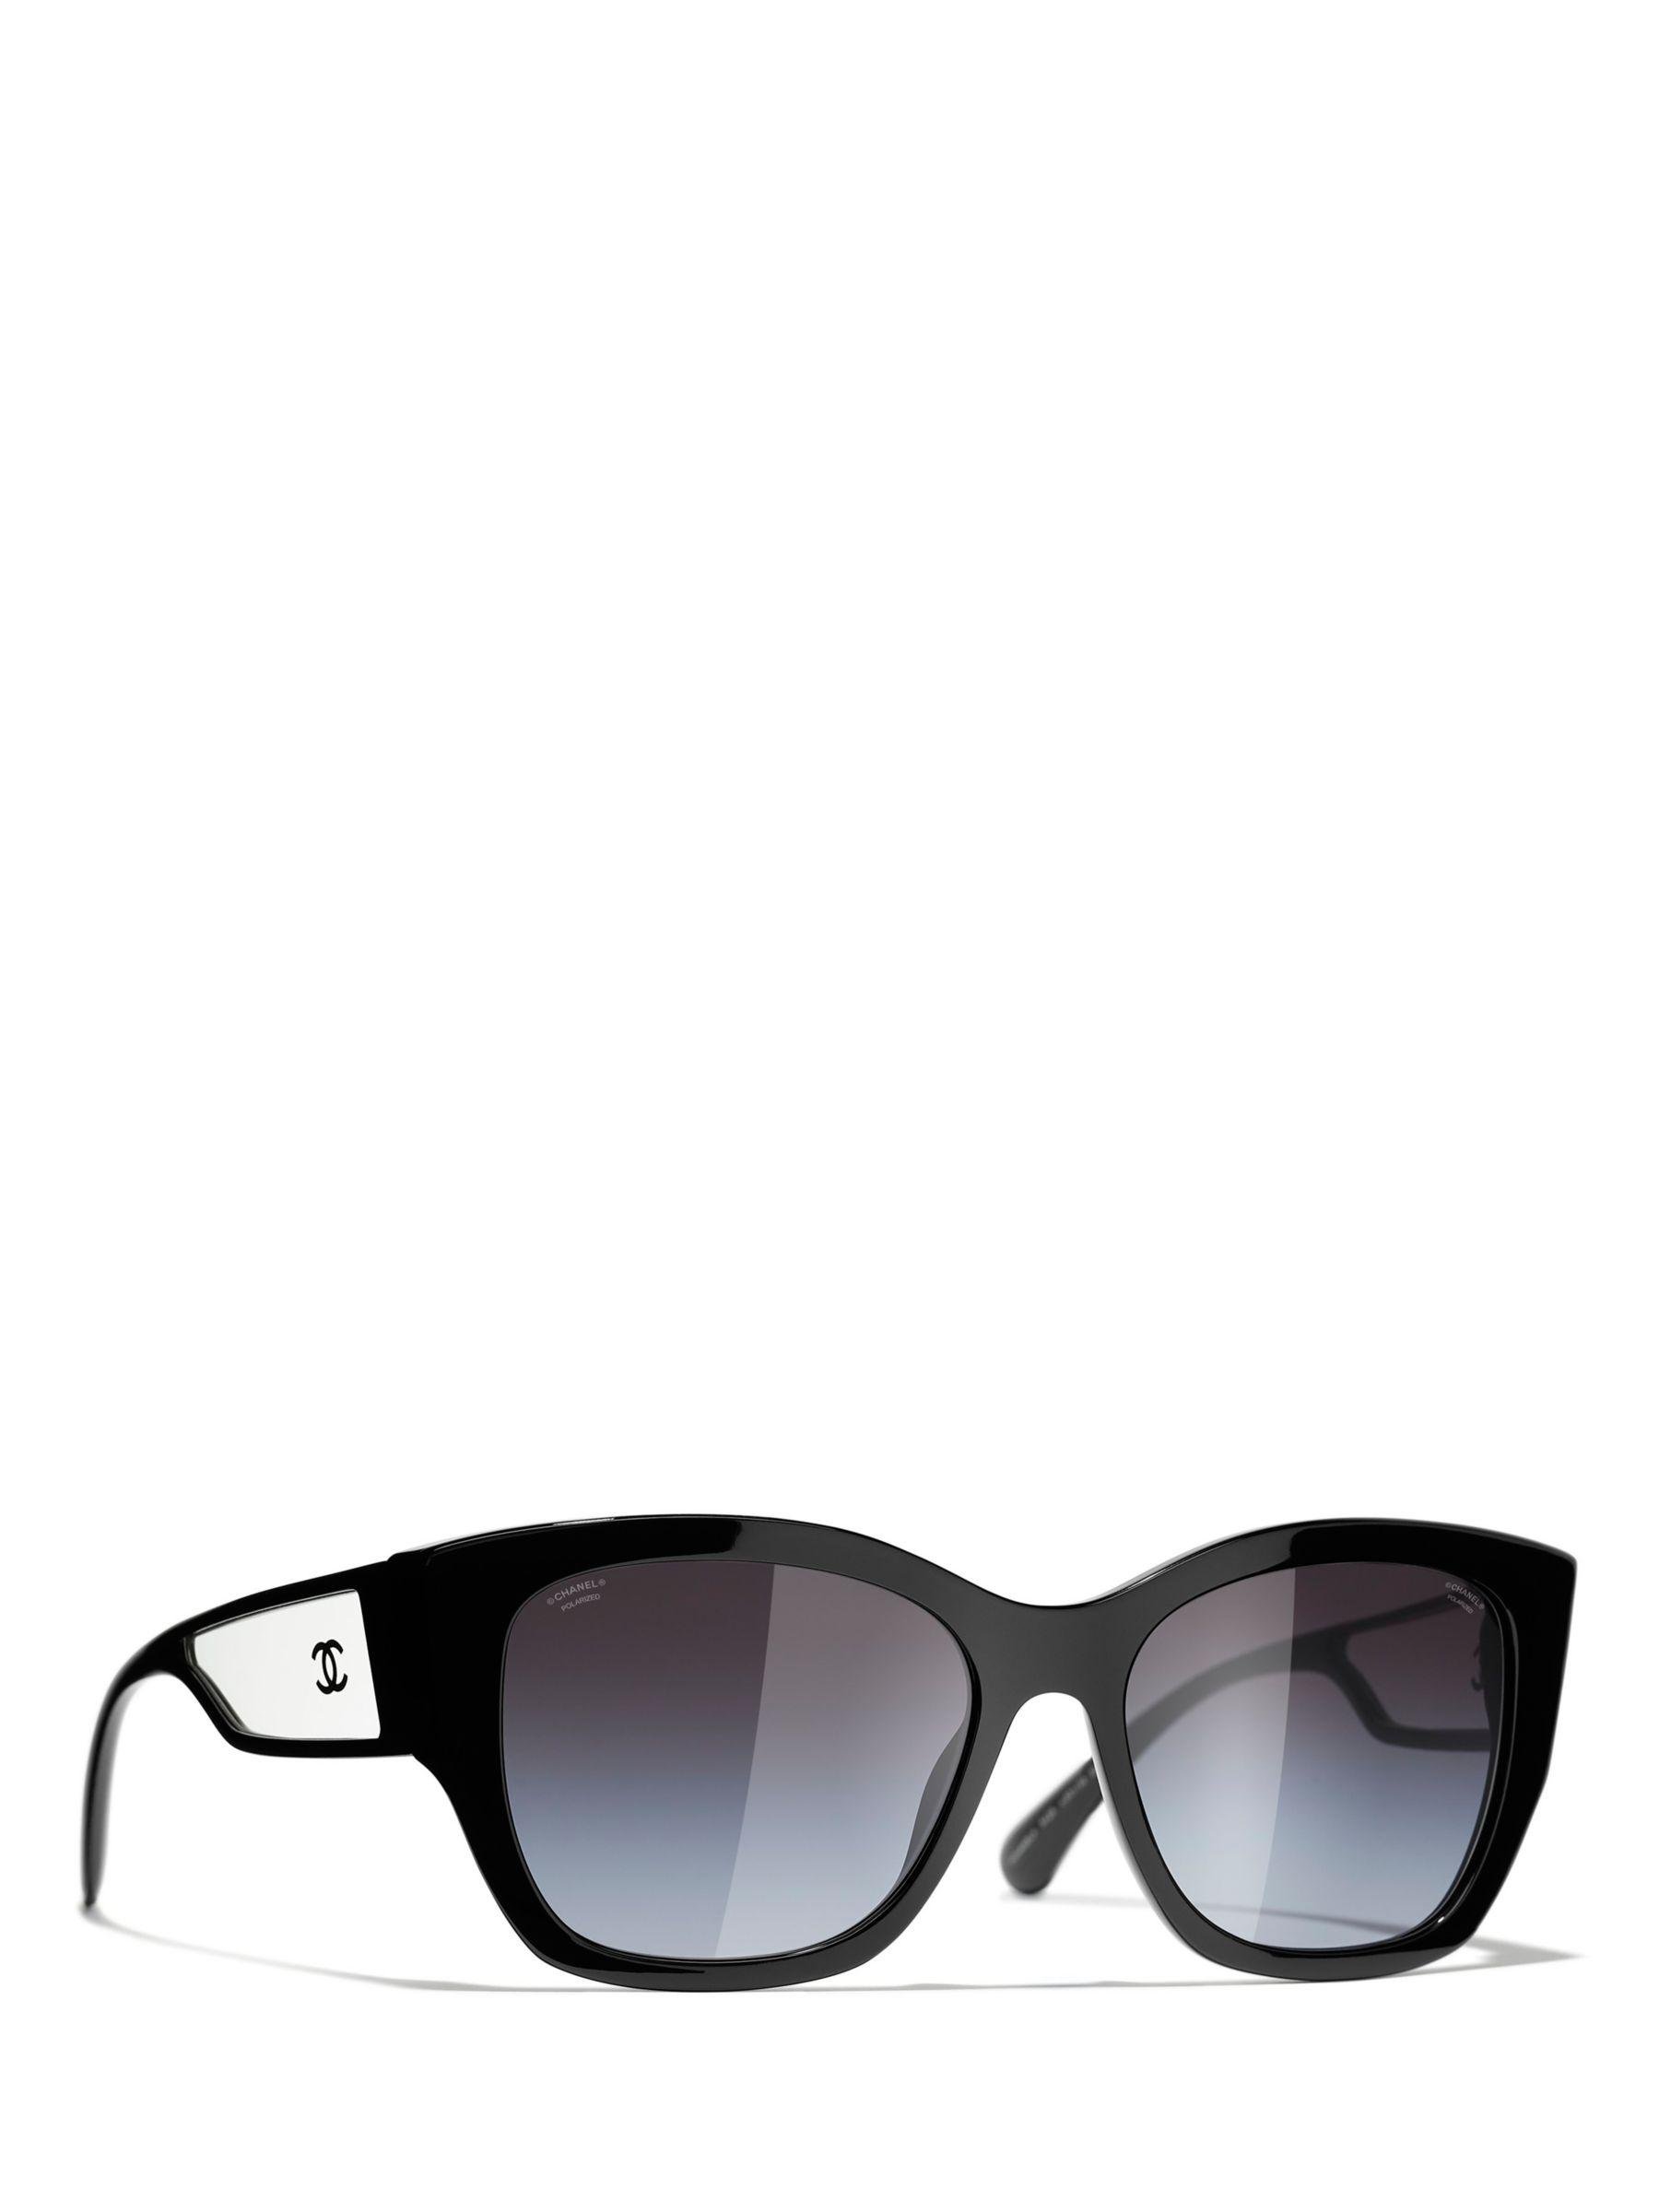 Chanel Irregular Sunglasses Ch5429 Black/grey Gradient